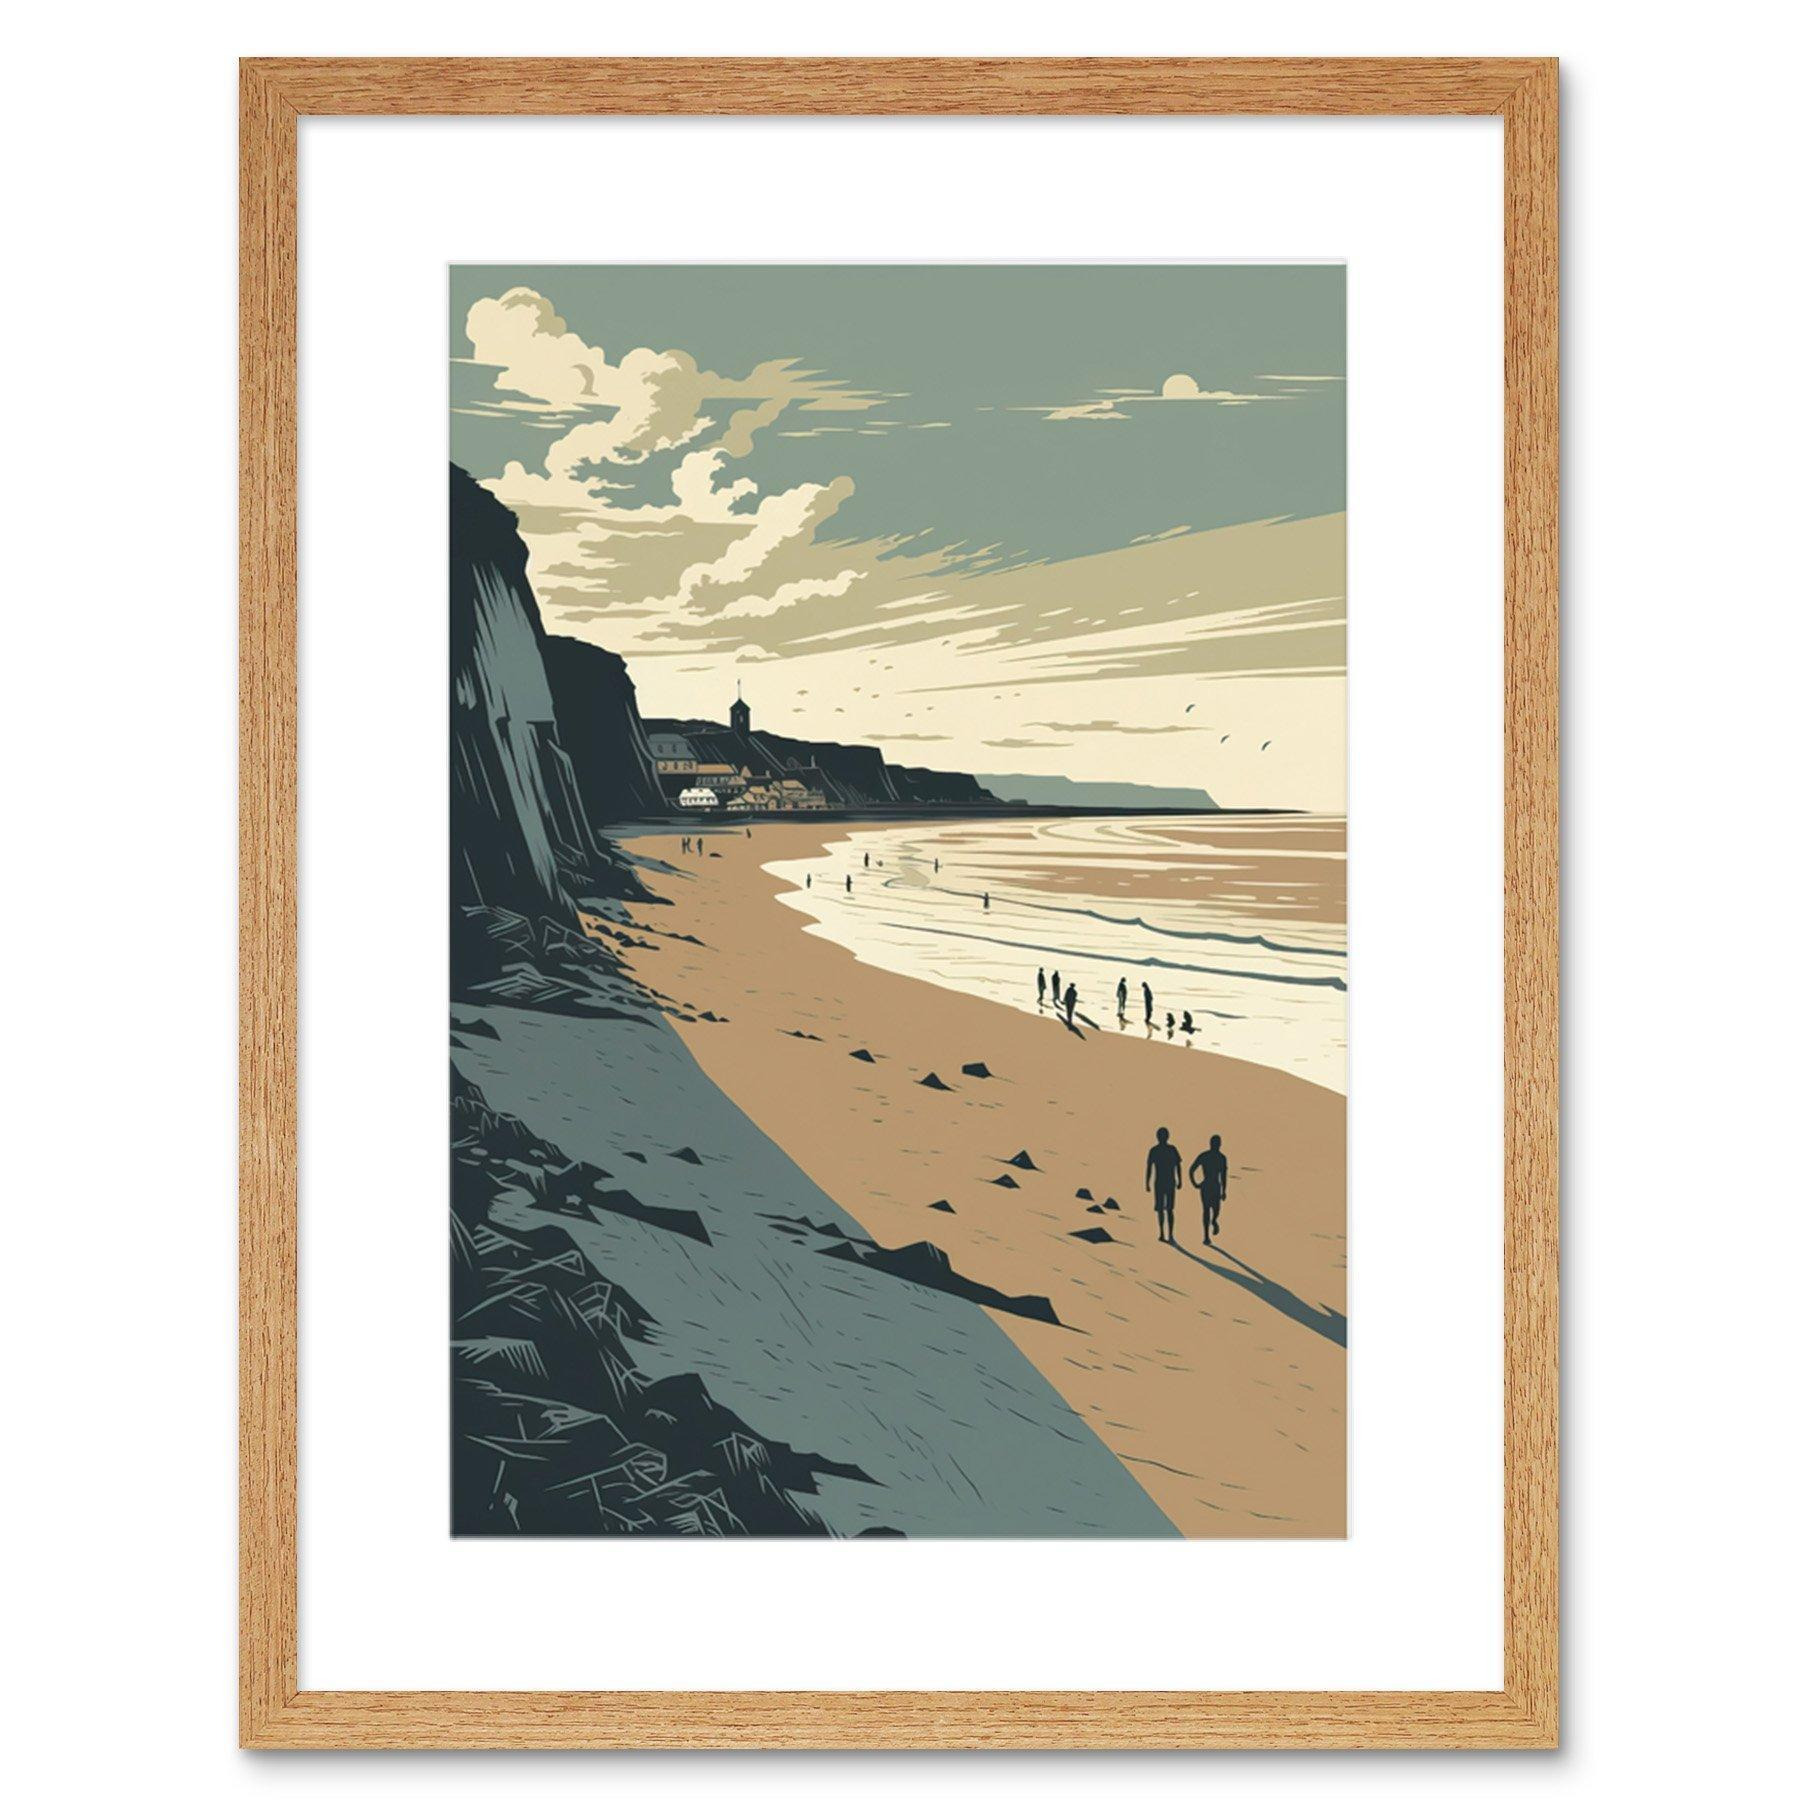 People Walking on Filey Beach Coastal Illustration Artwork Framed Wall Art Print 9X7 Inch - image 1